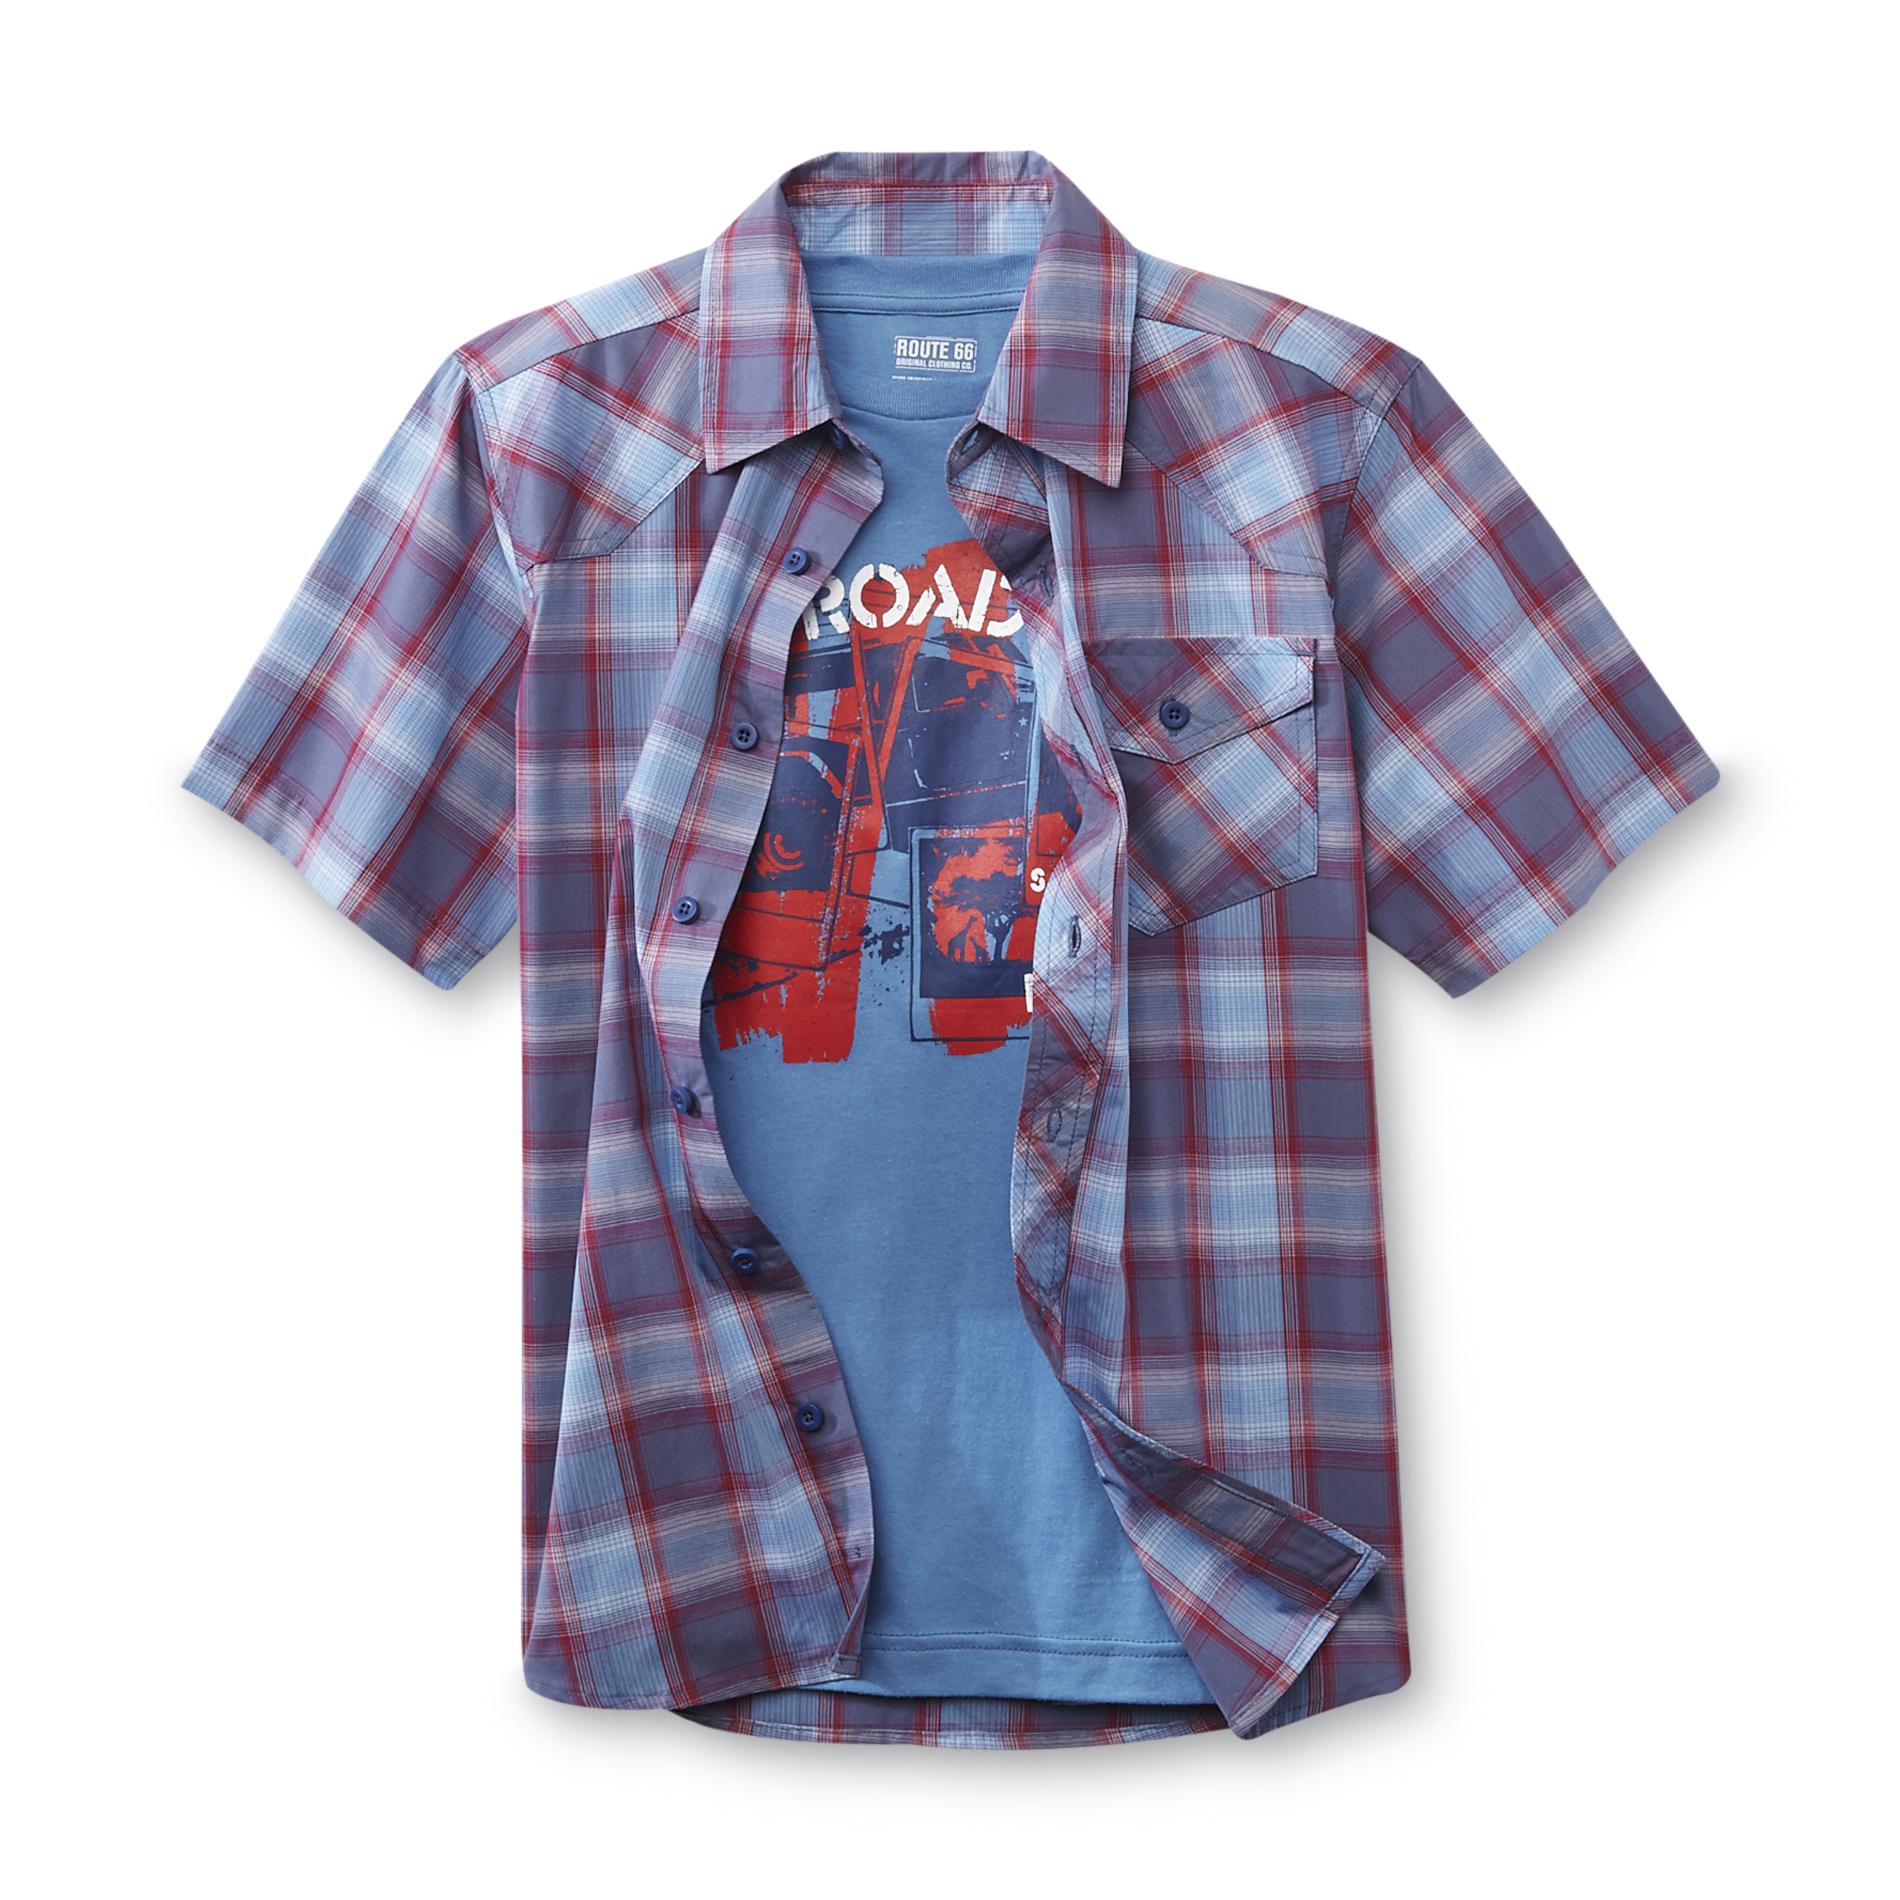 Route 66 Boy's Plaid Shirt & Graphic T-Shirt - Safari Tour